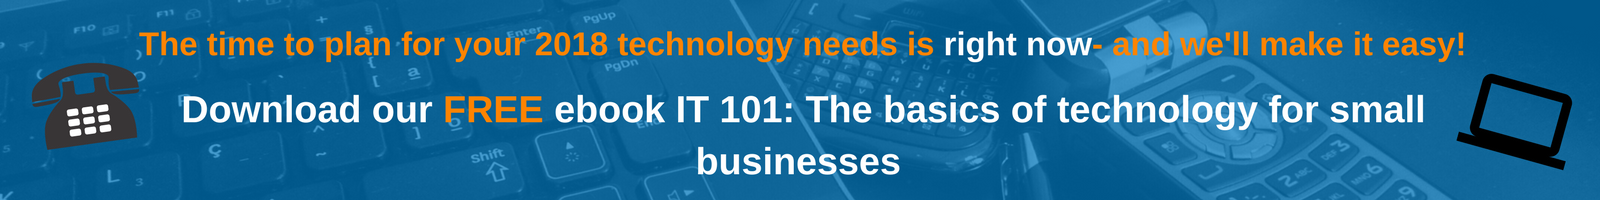 IT 101 ebook-1